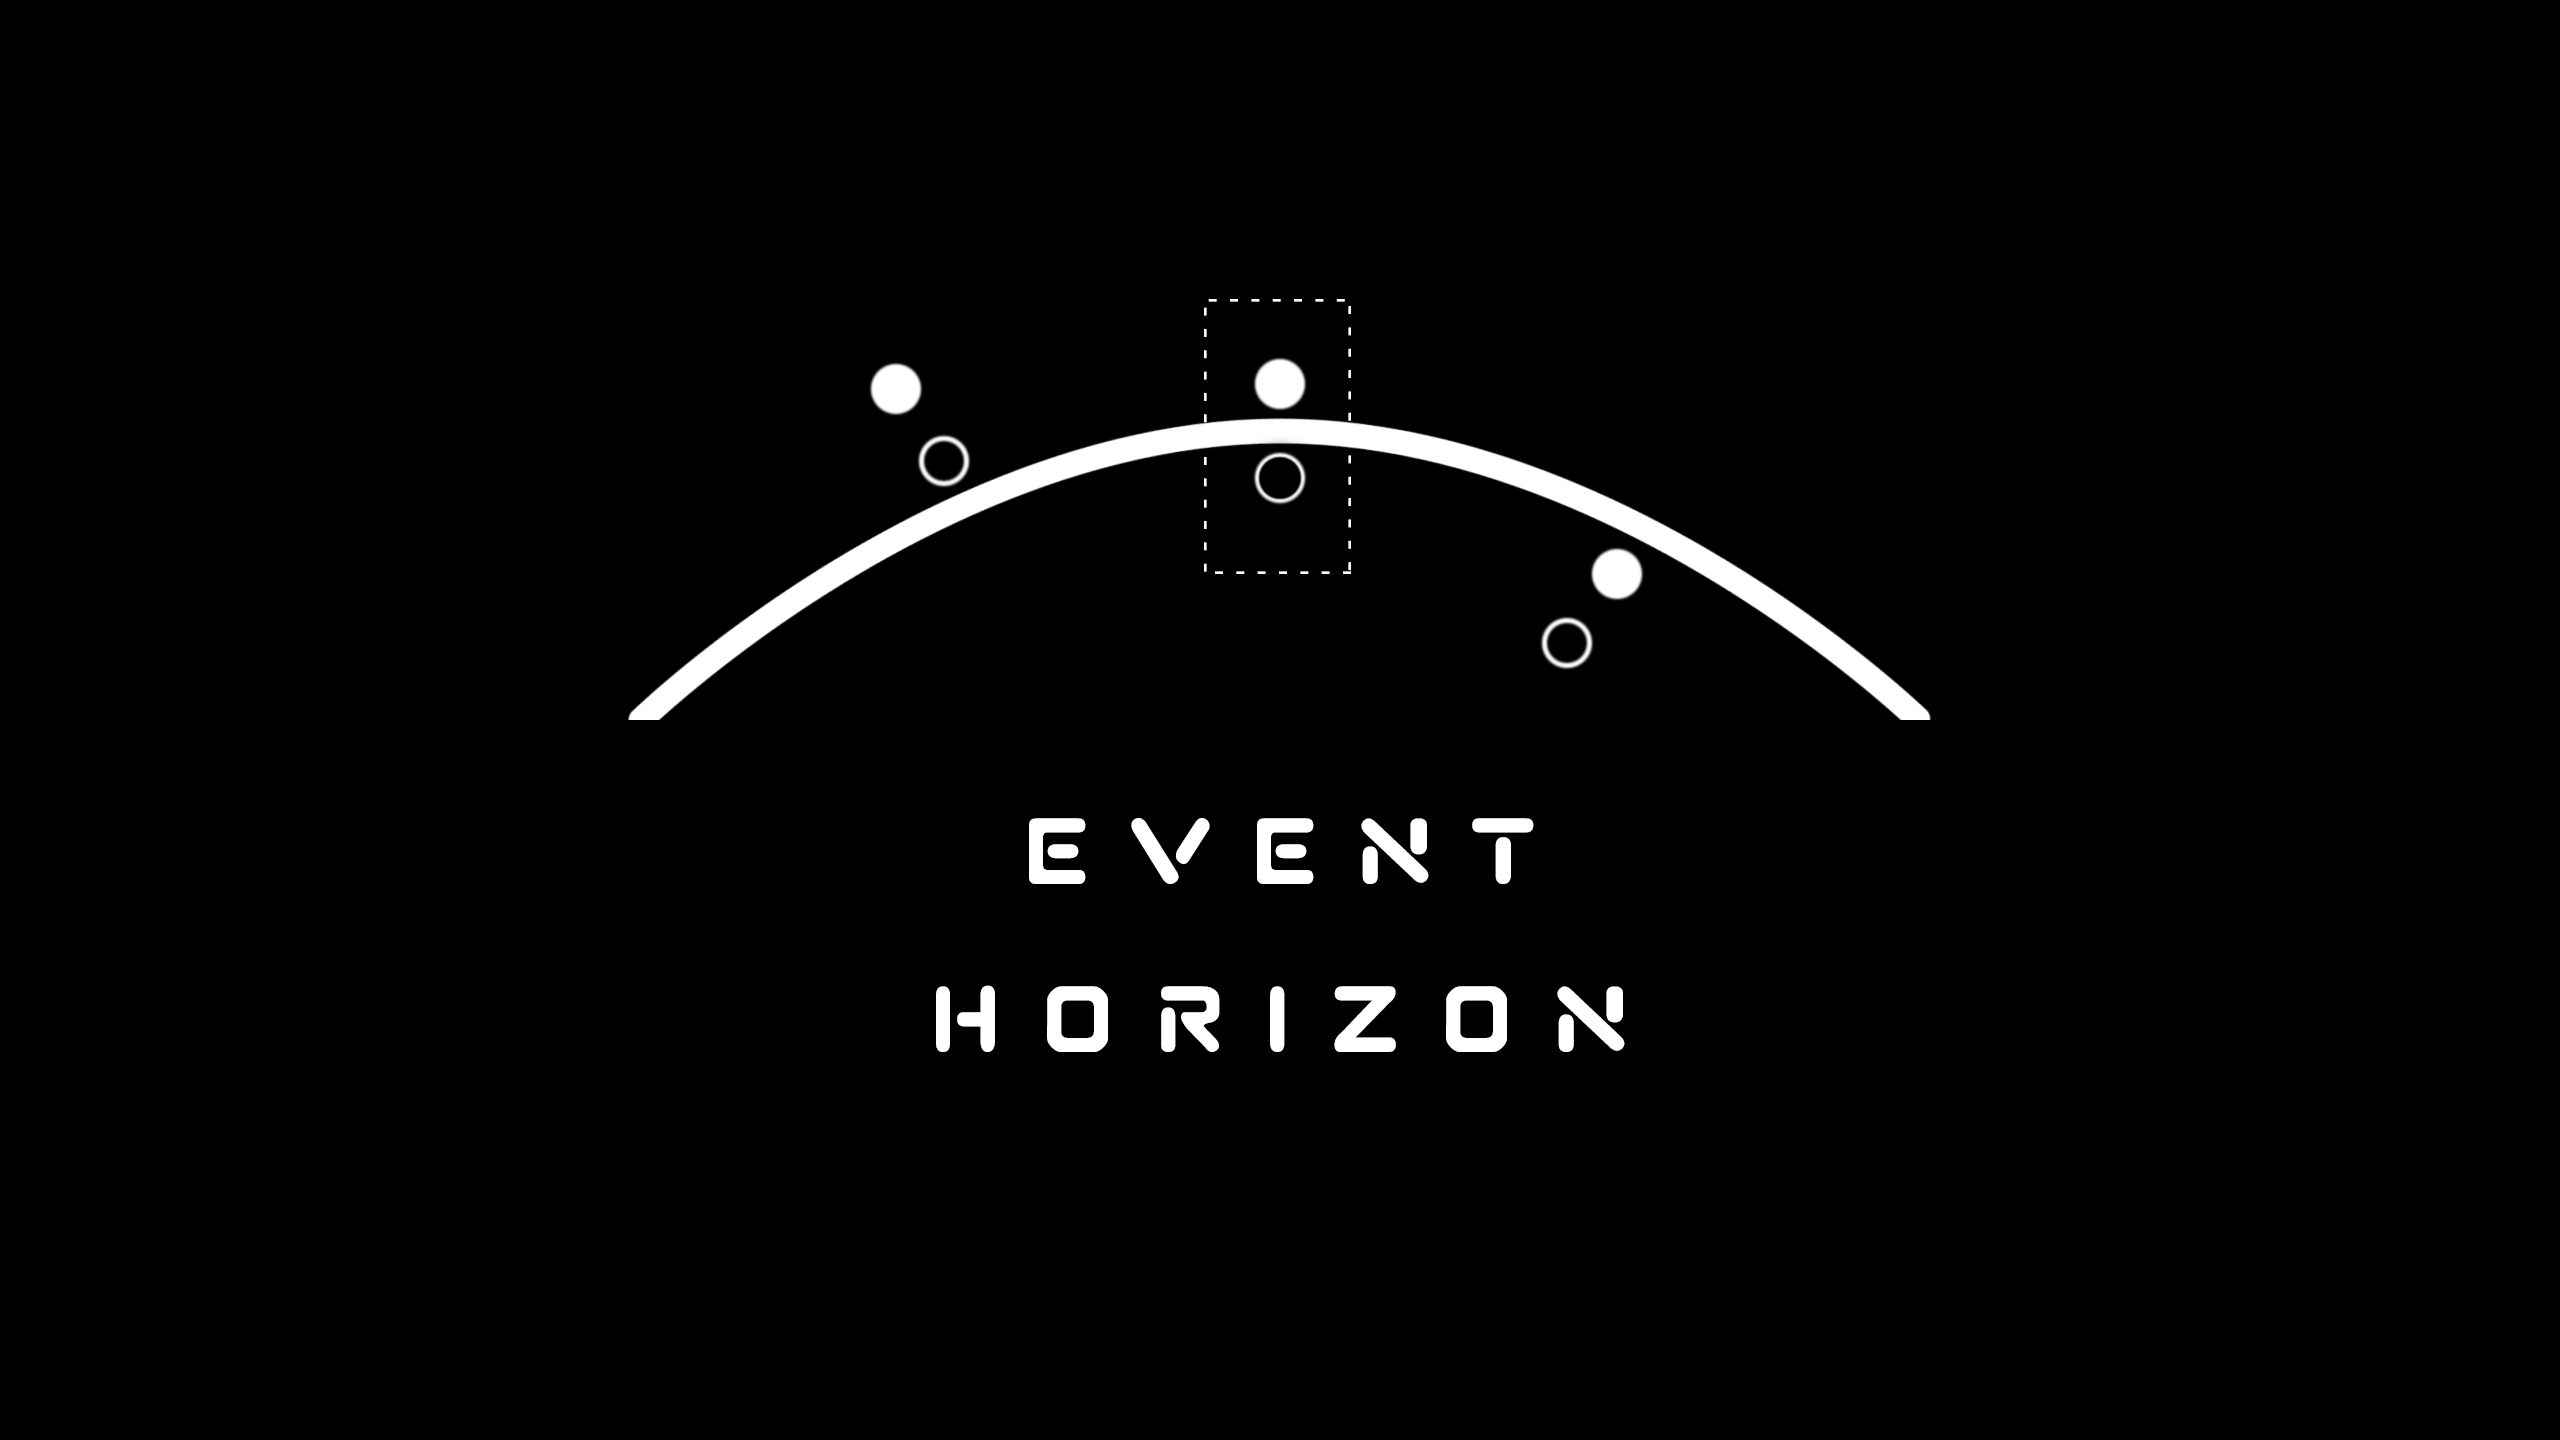 General 2560x1440 event horizon black holes abstract universe digital art